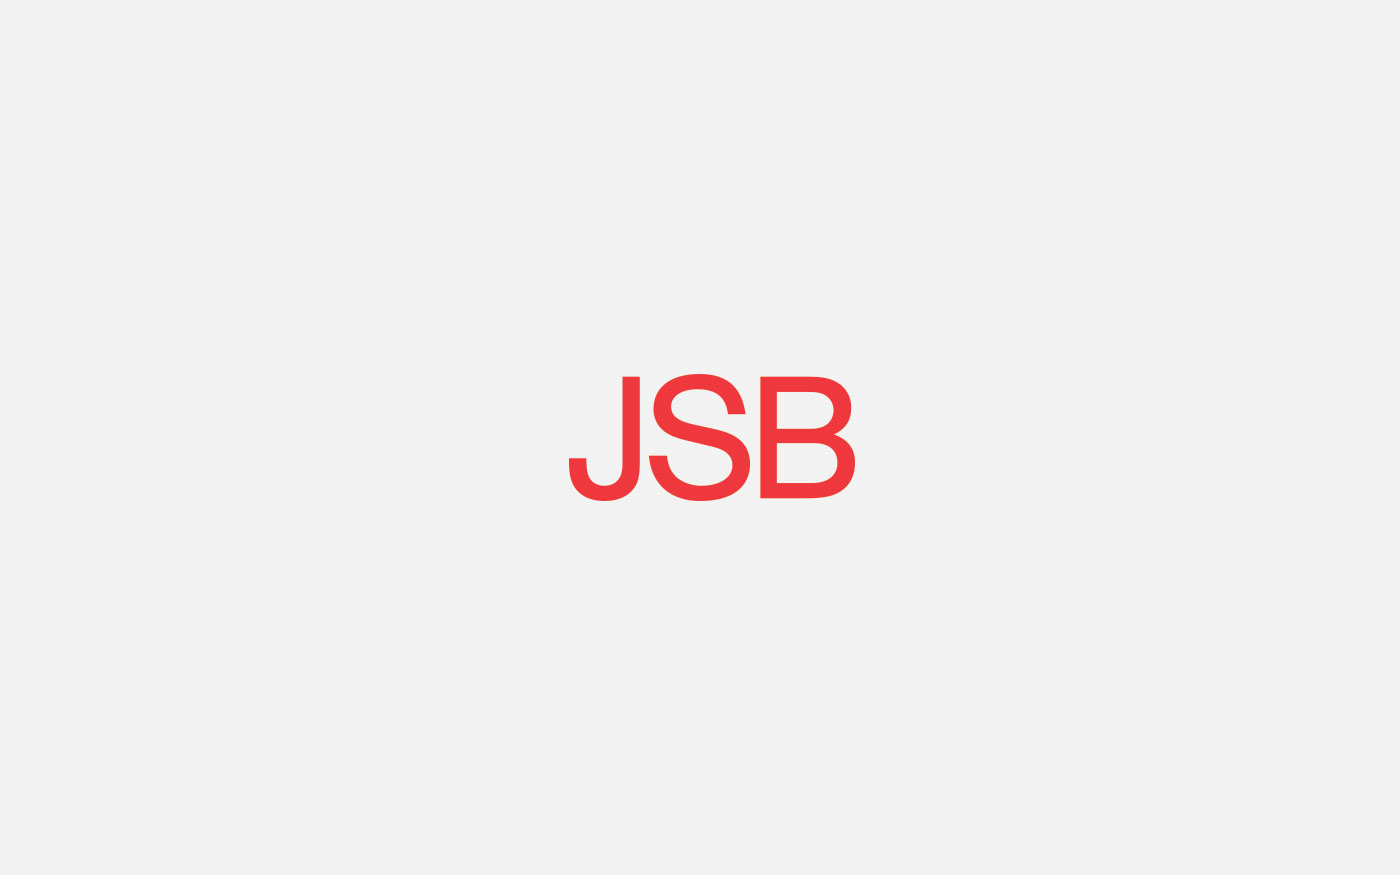 JSB Lighting